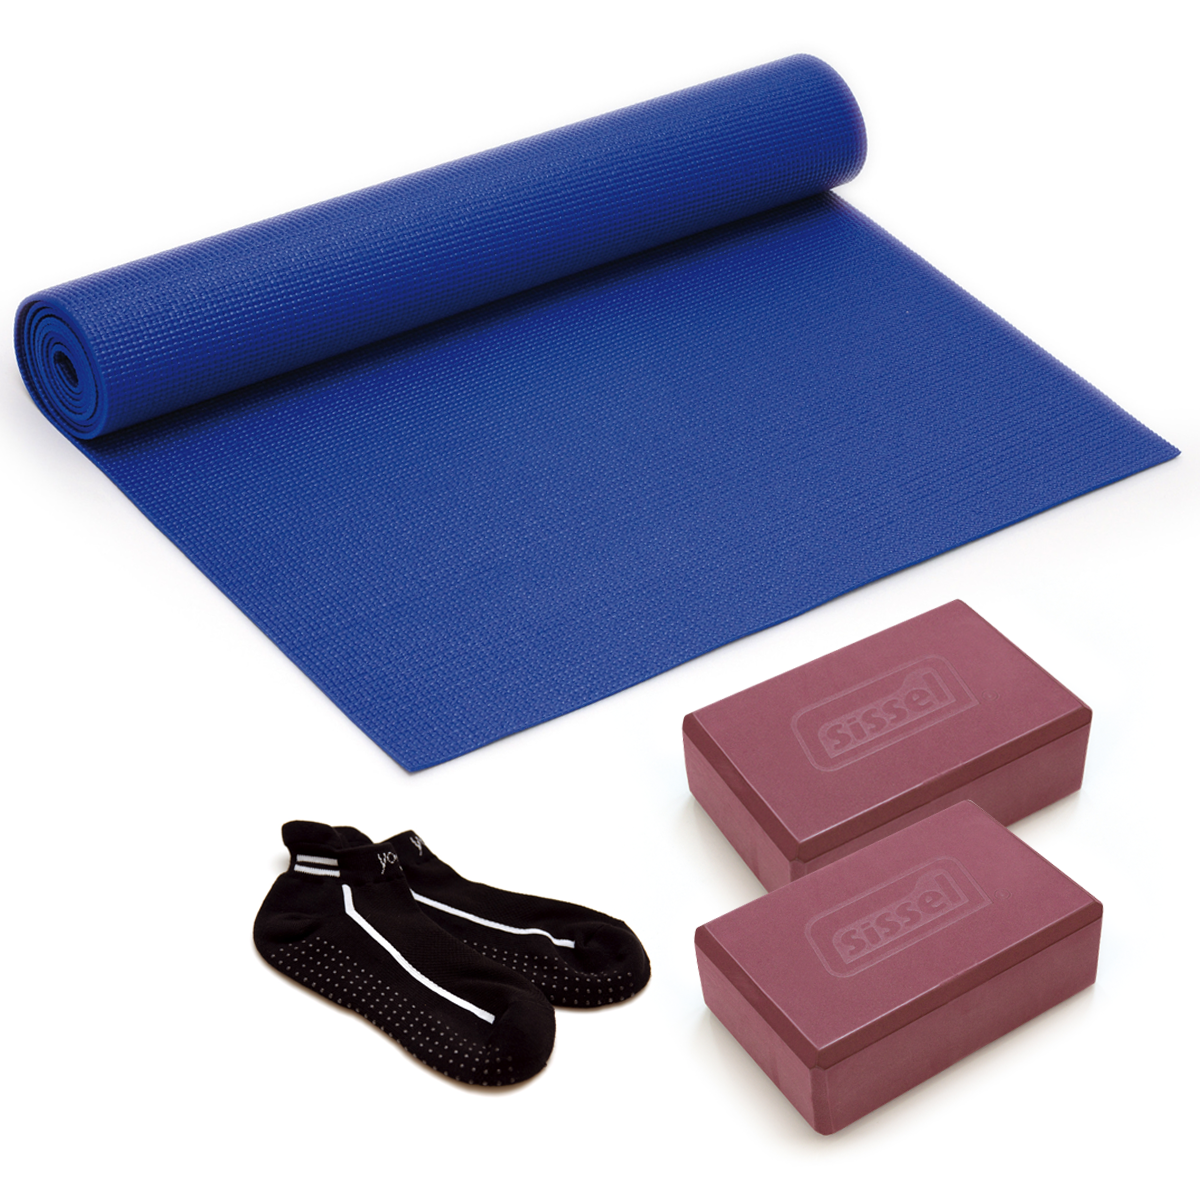 KIT YOGA: Calzini Yoga Socks, Materassino e 2 Blocchi